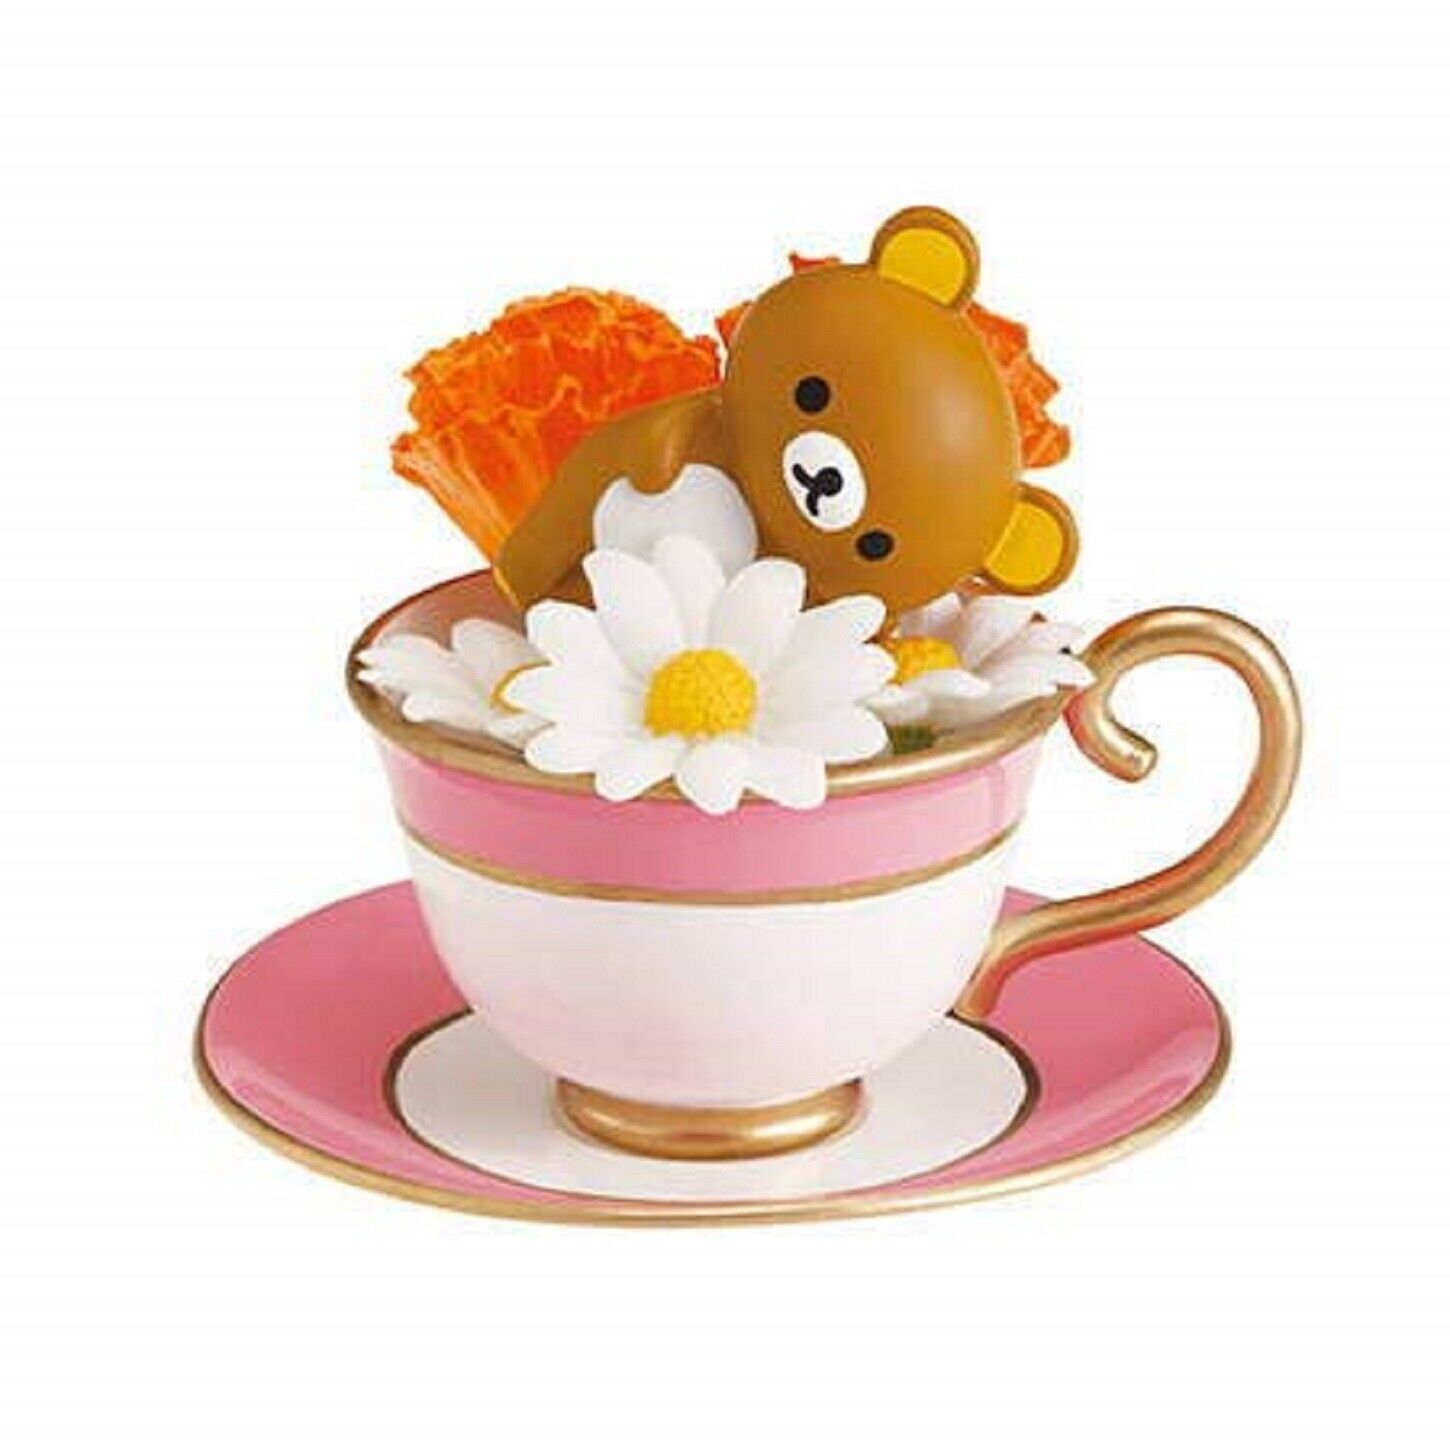 New San-X Rilakkuma Flower Tea Cup Miniature Figure Toy 1.Cup of Flowers